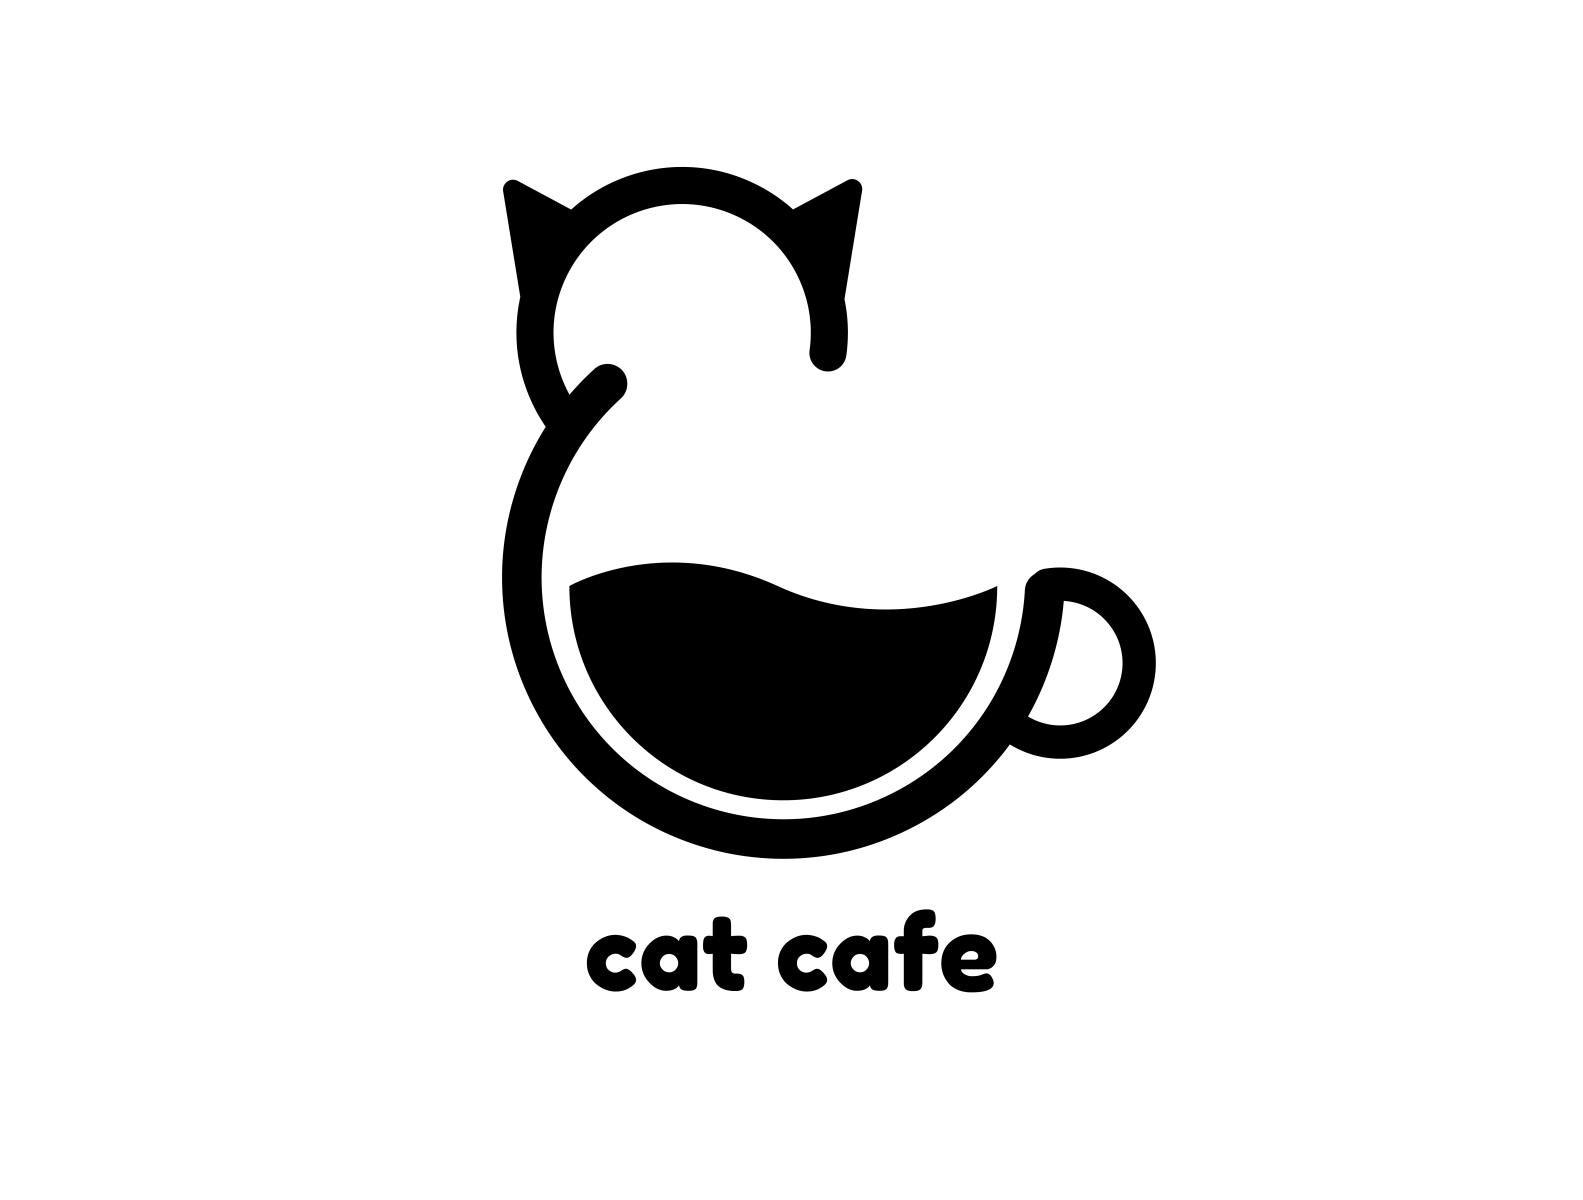 Dribbble - Cat Cafe logo 01.png by Fajar Prasetya.